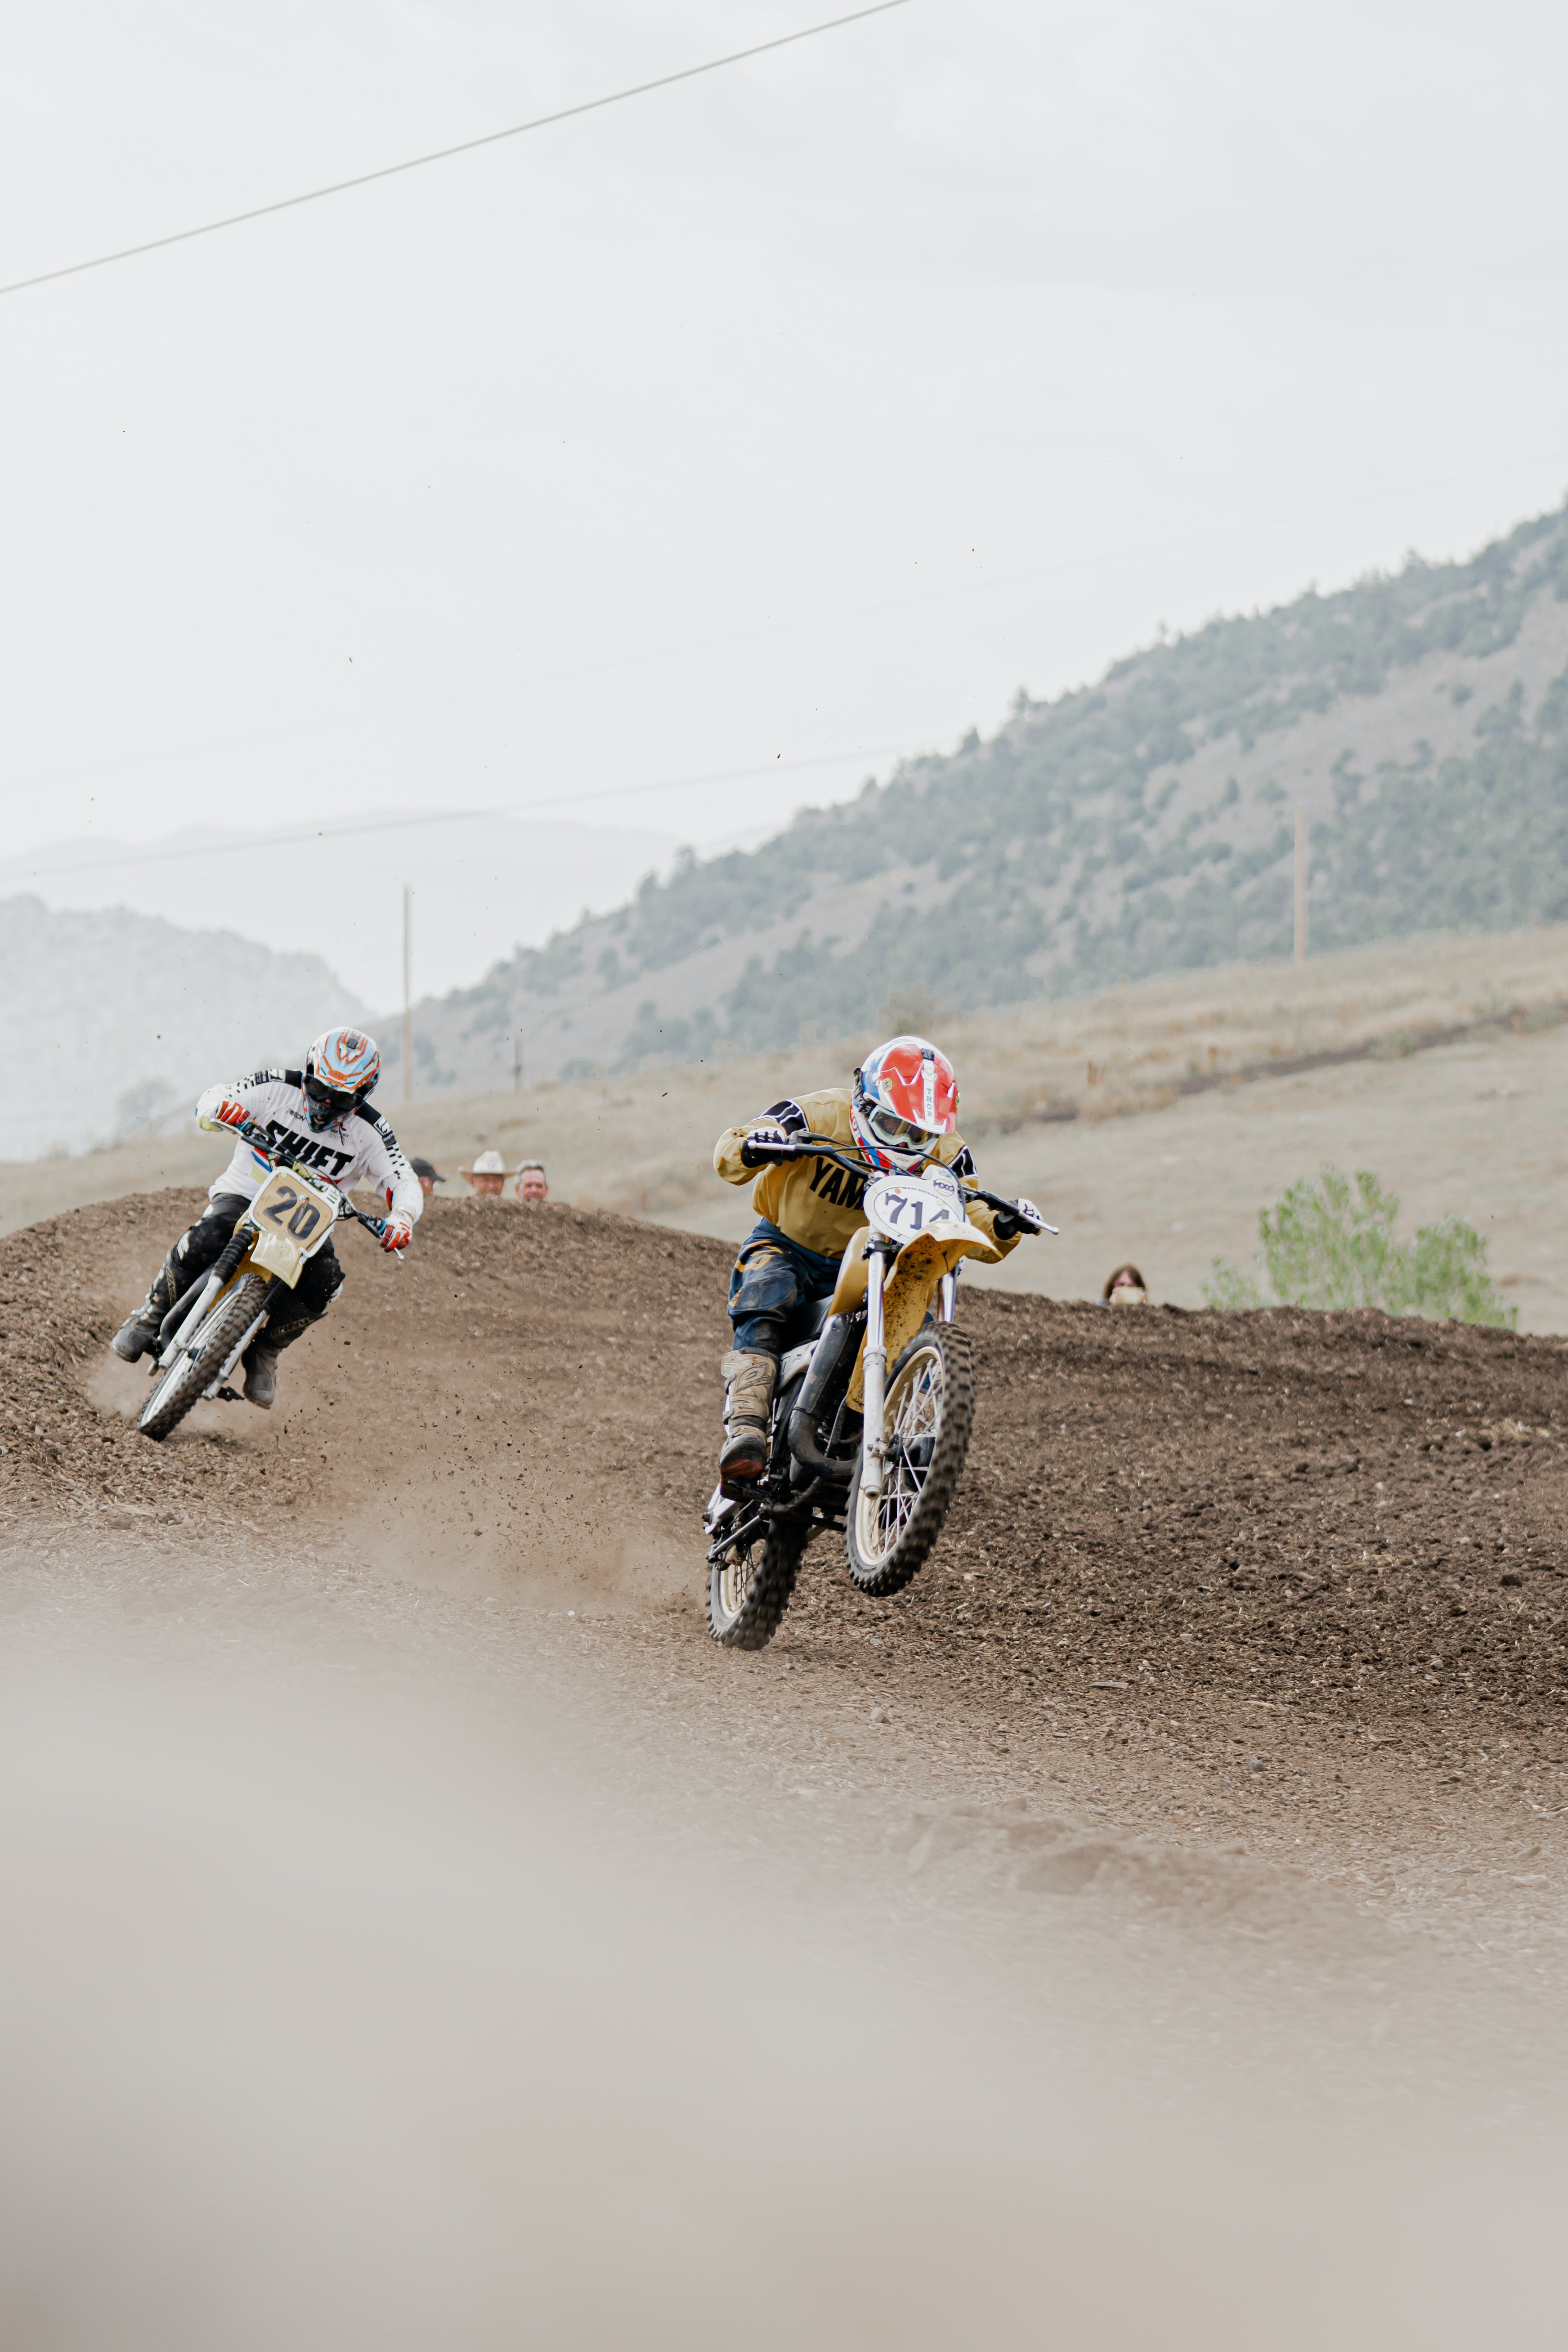 motorcycles, motorcyclist, motorcycle, bike, dust, race